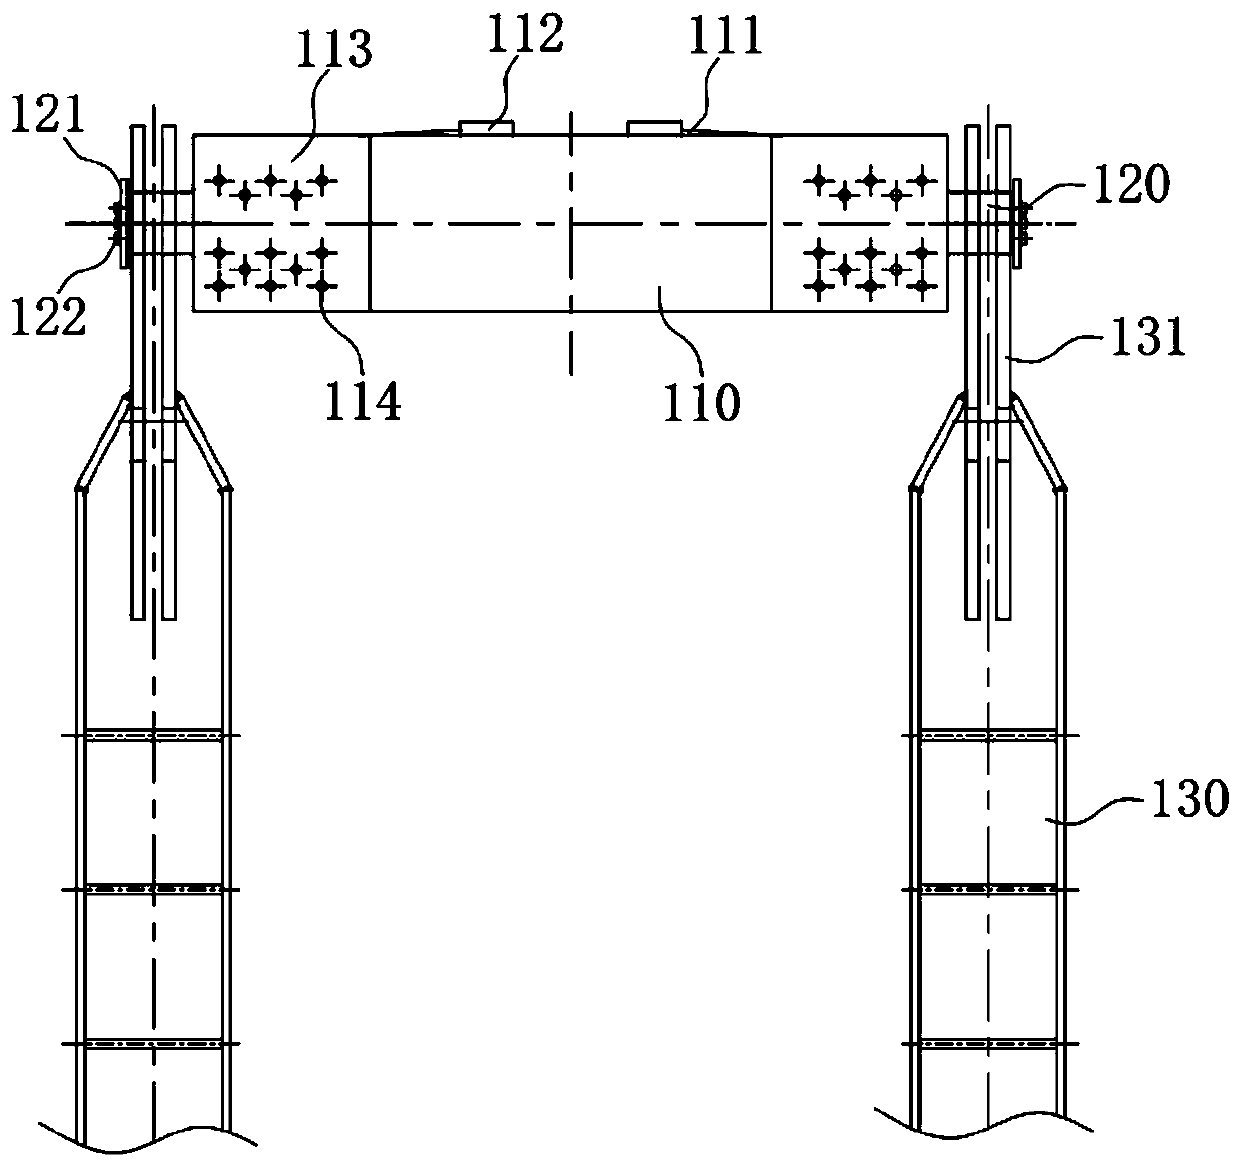 Sea-tie pole device and sea-tie method for heavy equipment